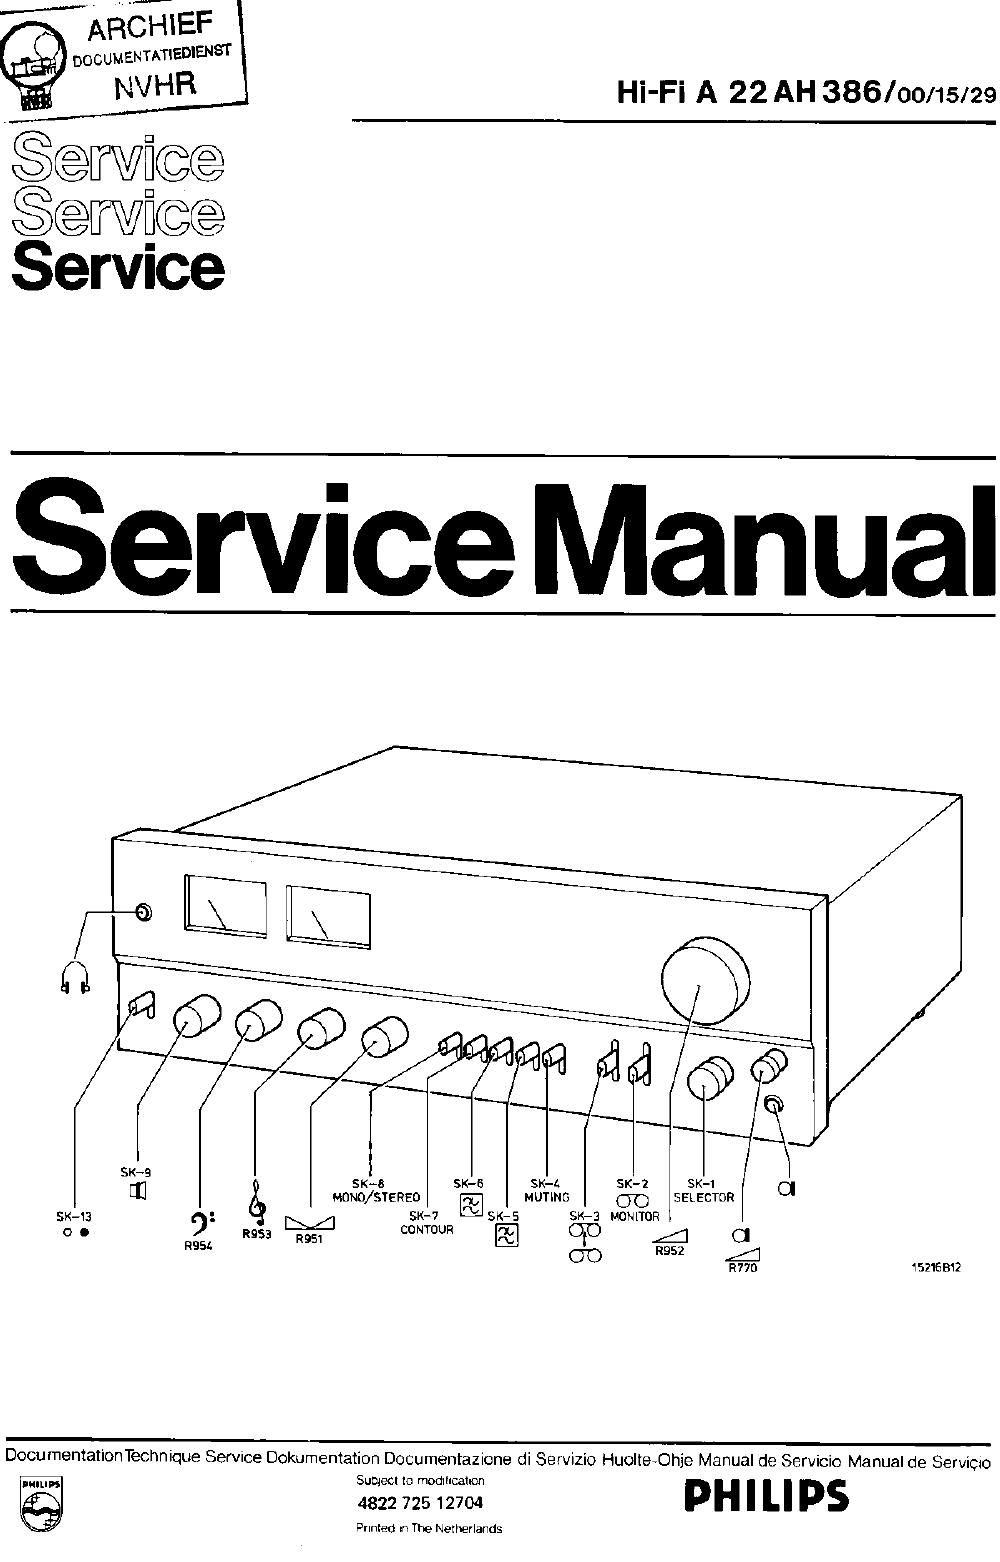 philips 22 ah 386 service manual